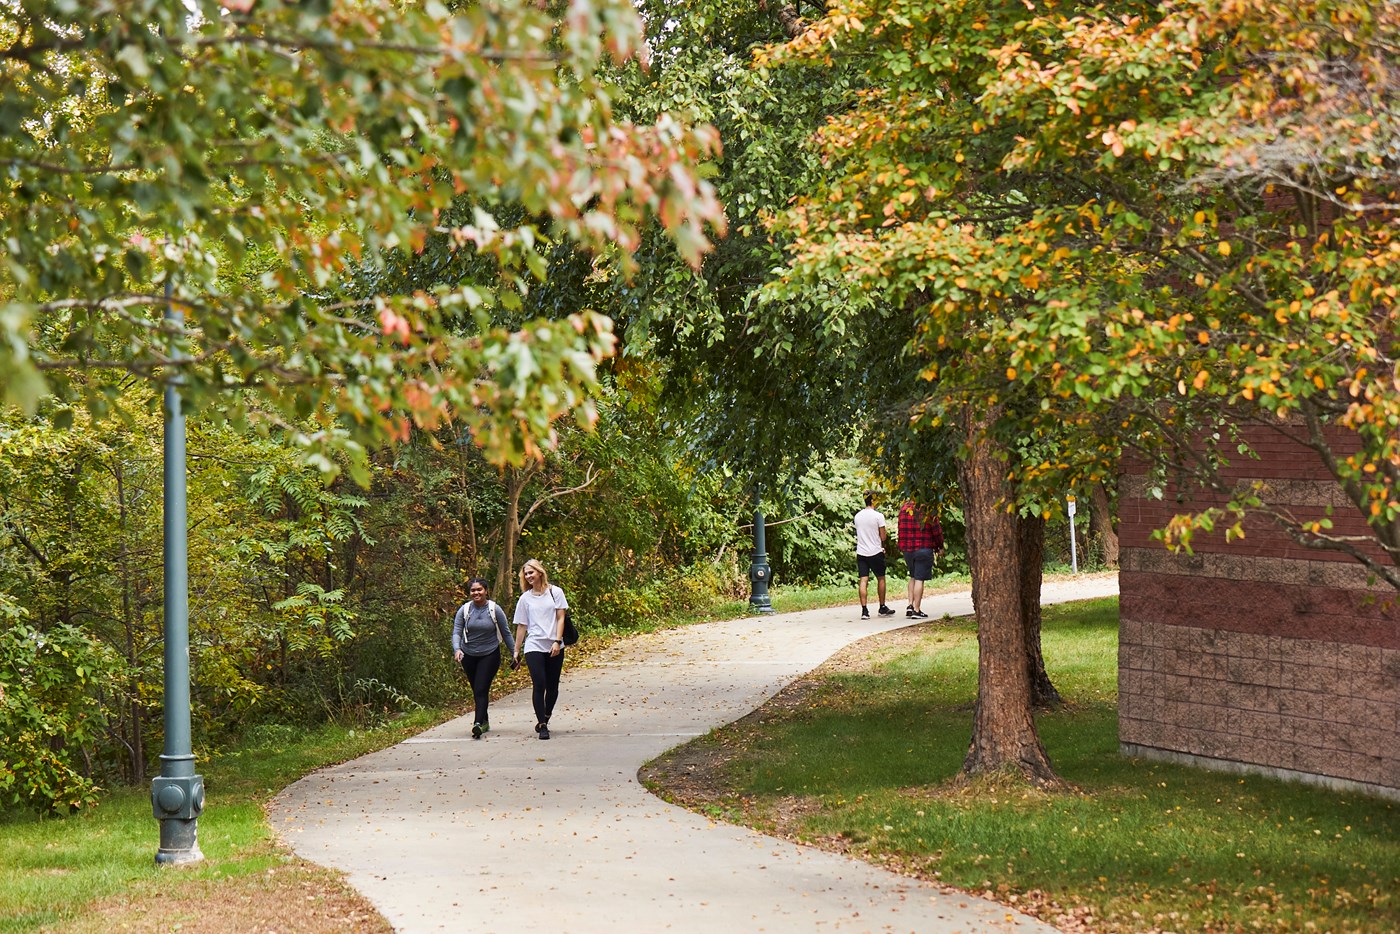 Students walking through tree lined walkway